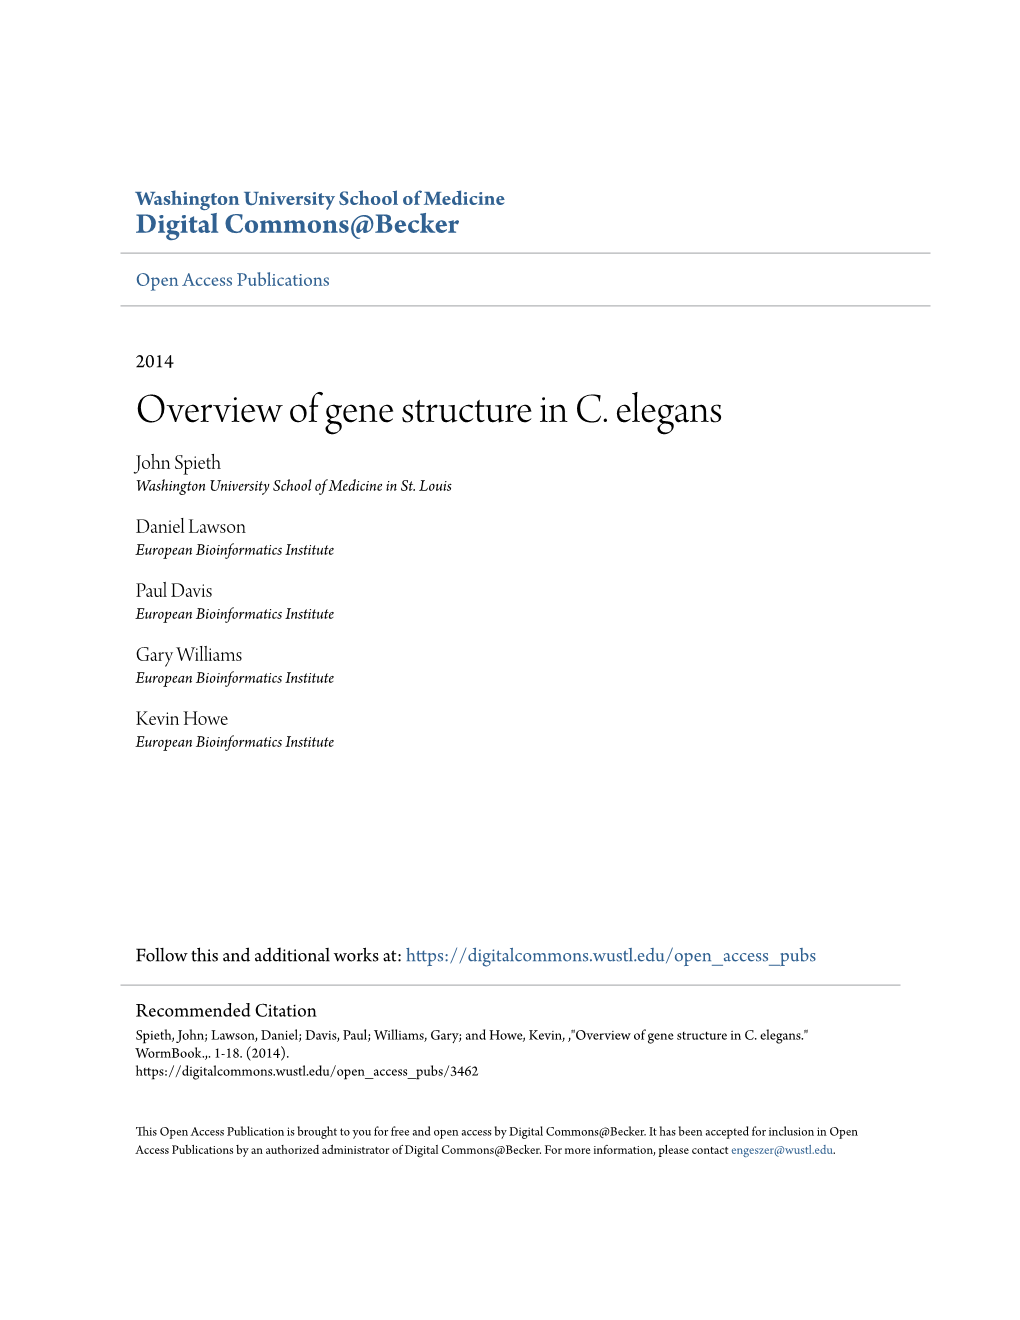 Overview of Gene Structure in C. Elegans John Spieth Washington University School of Medicine in St